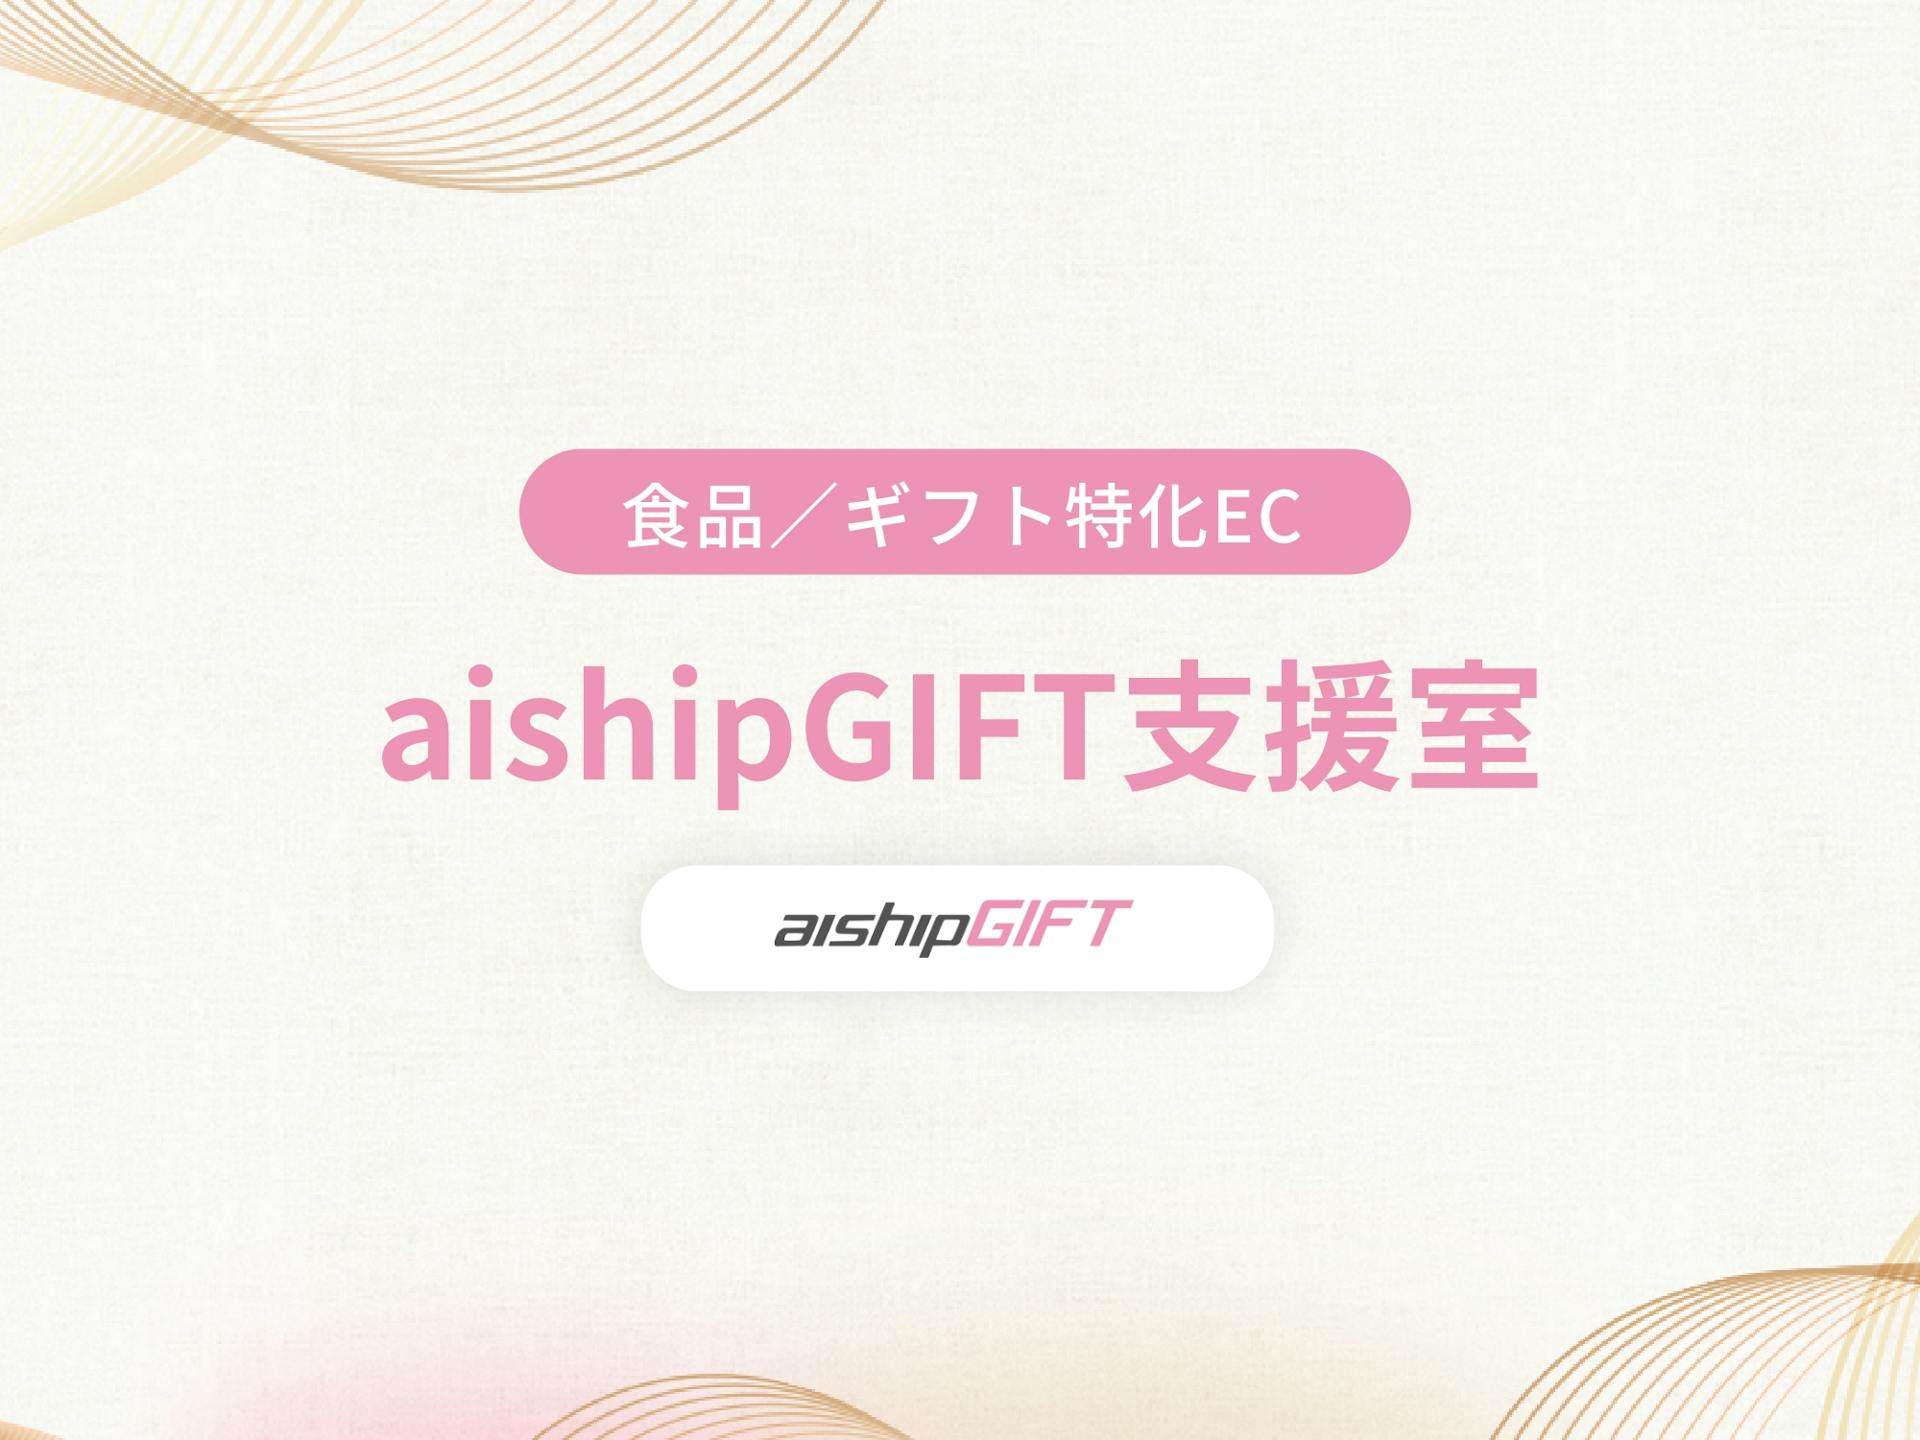 aishipGIFT支援室 サービス提供のお知らせ メイン画像